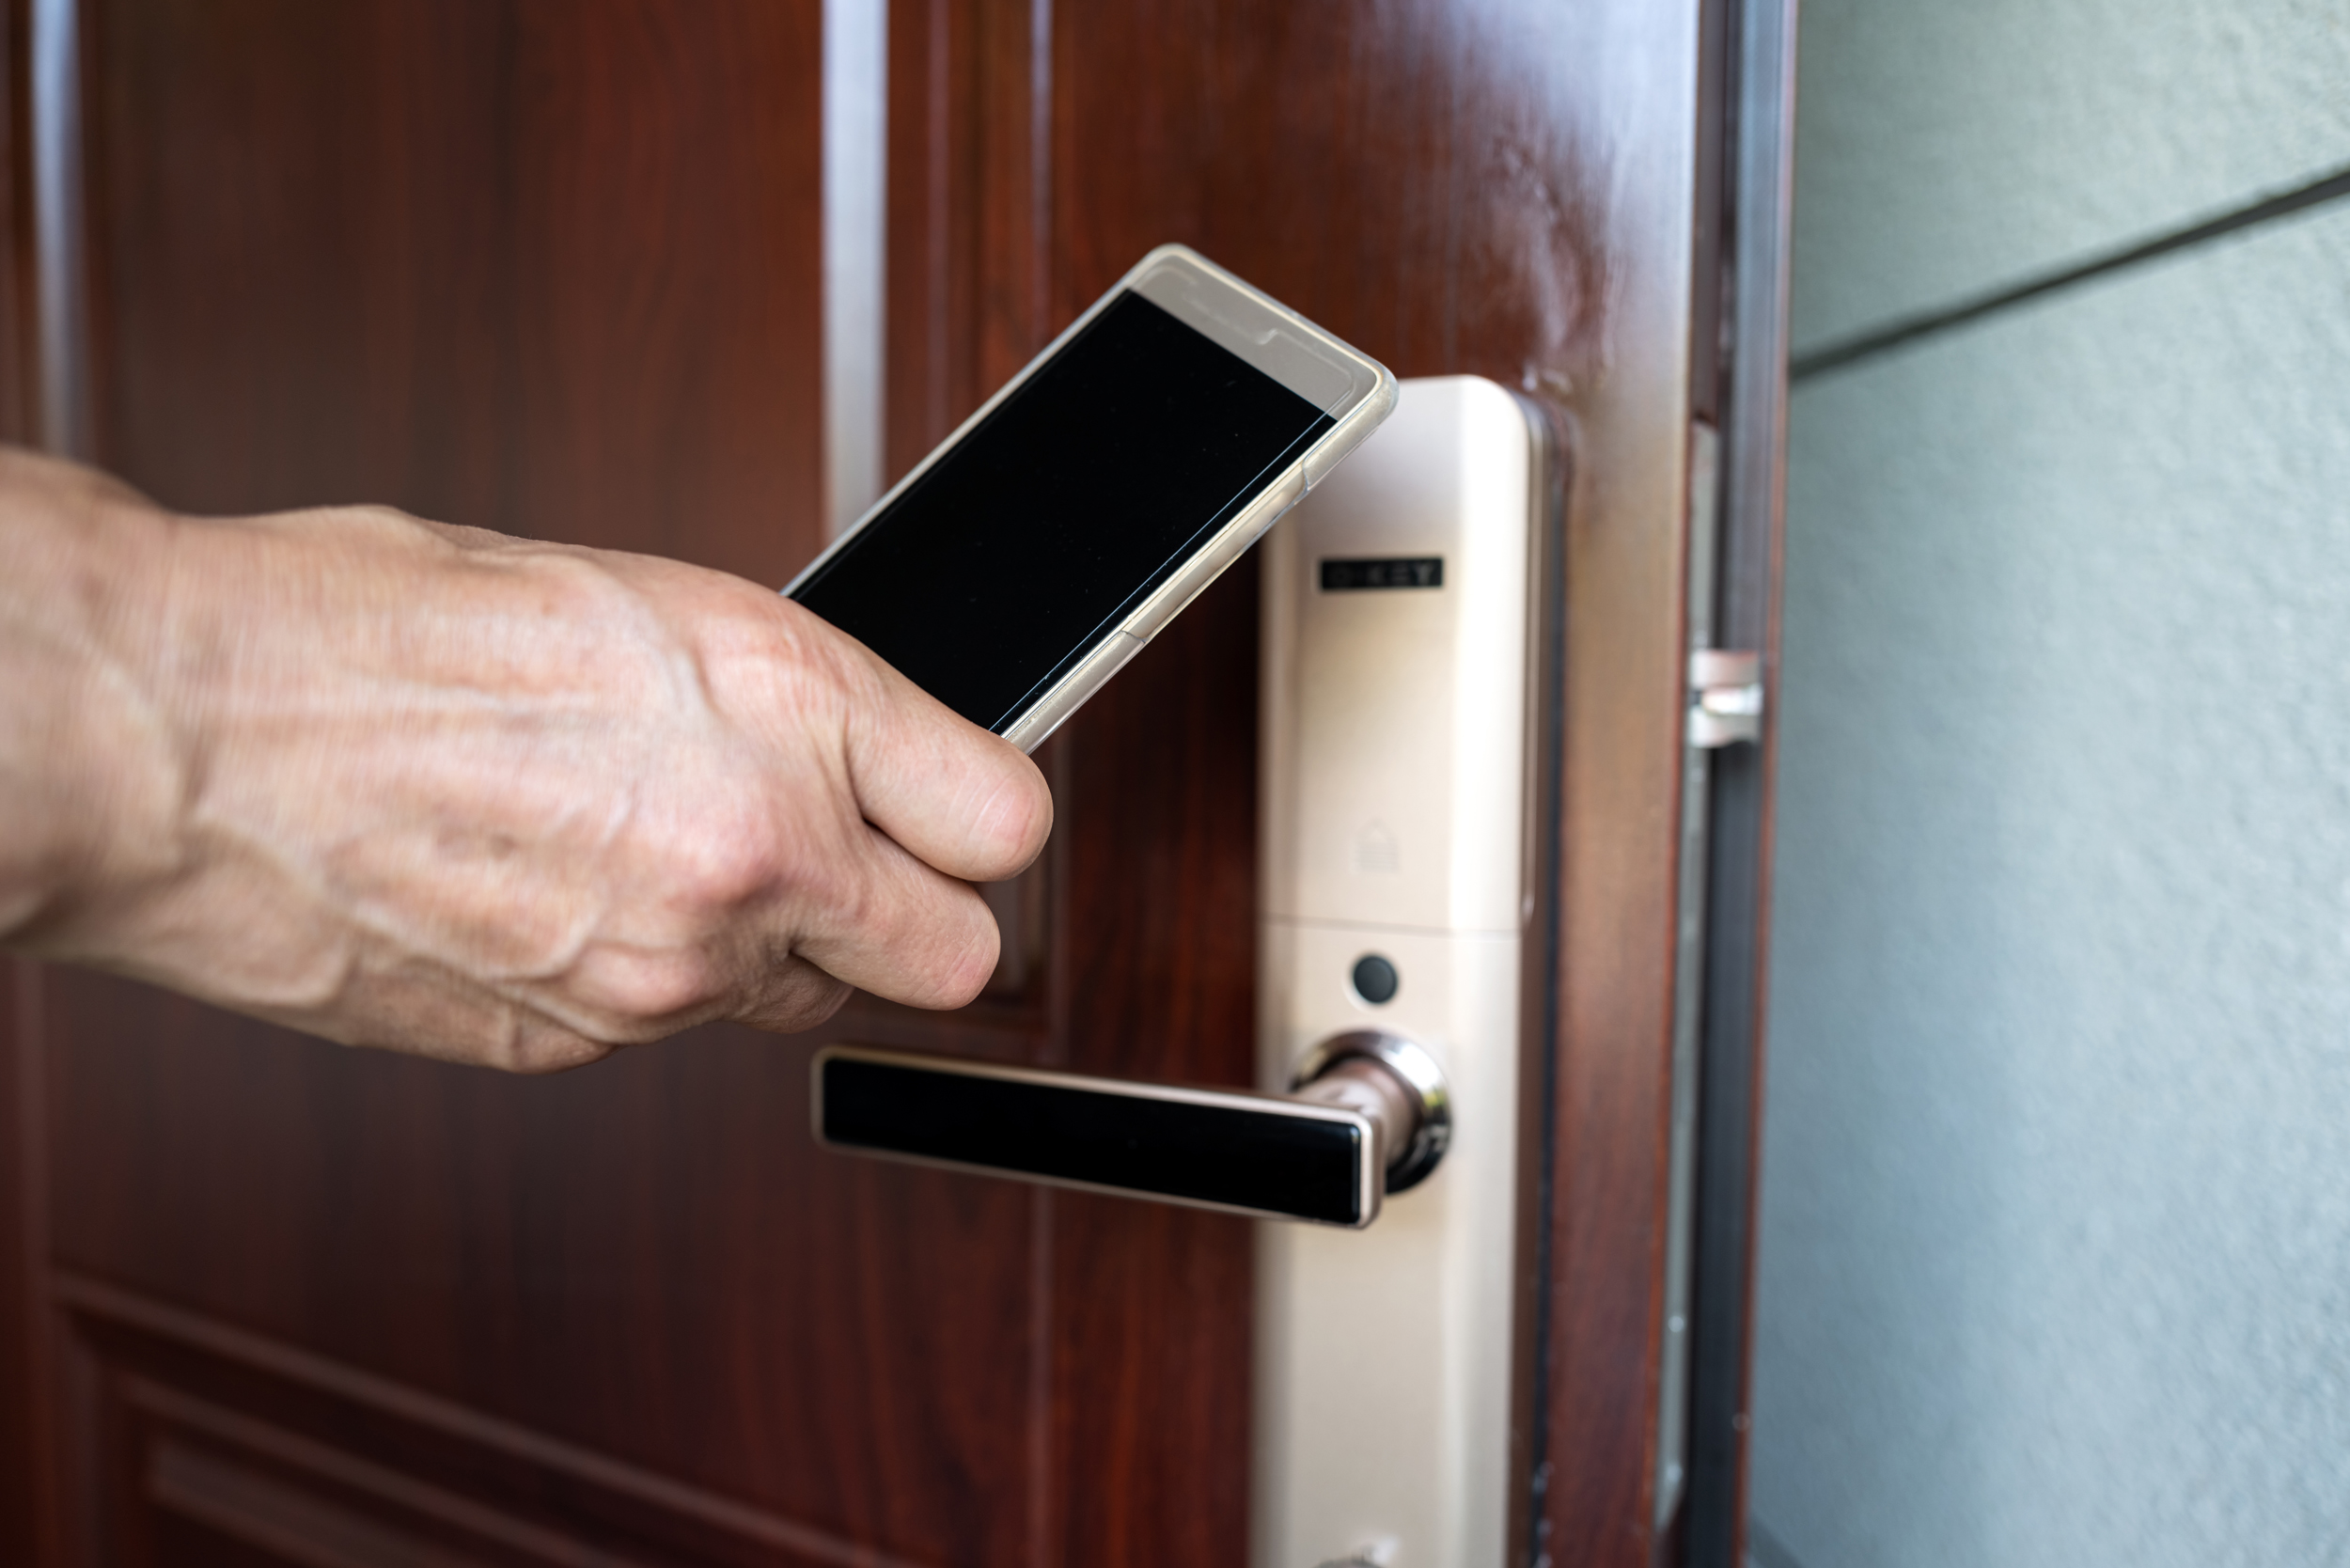 Human hand uses mobile phone to sense room door.